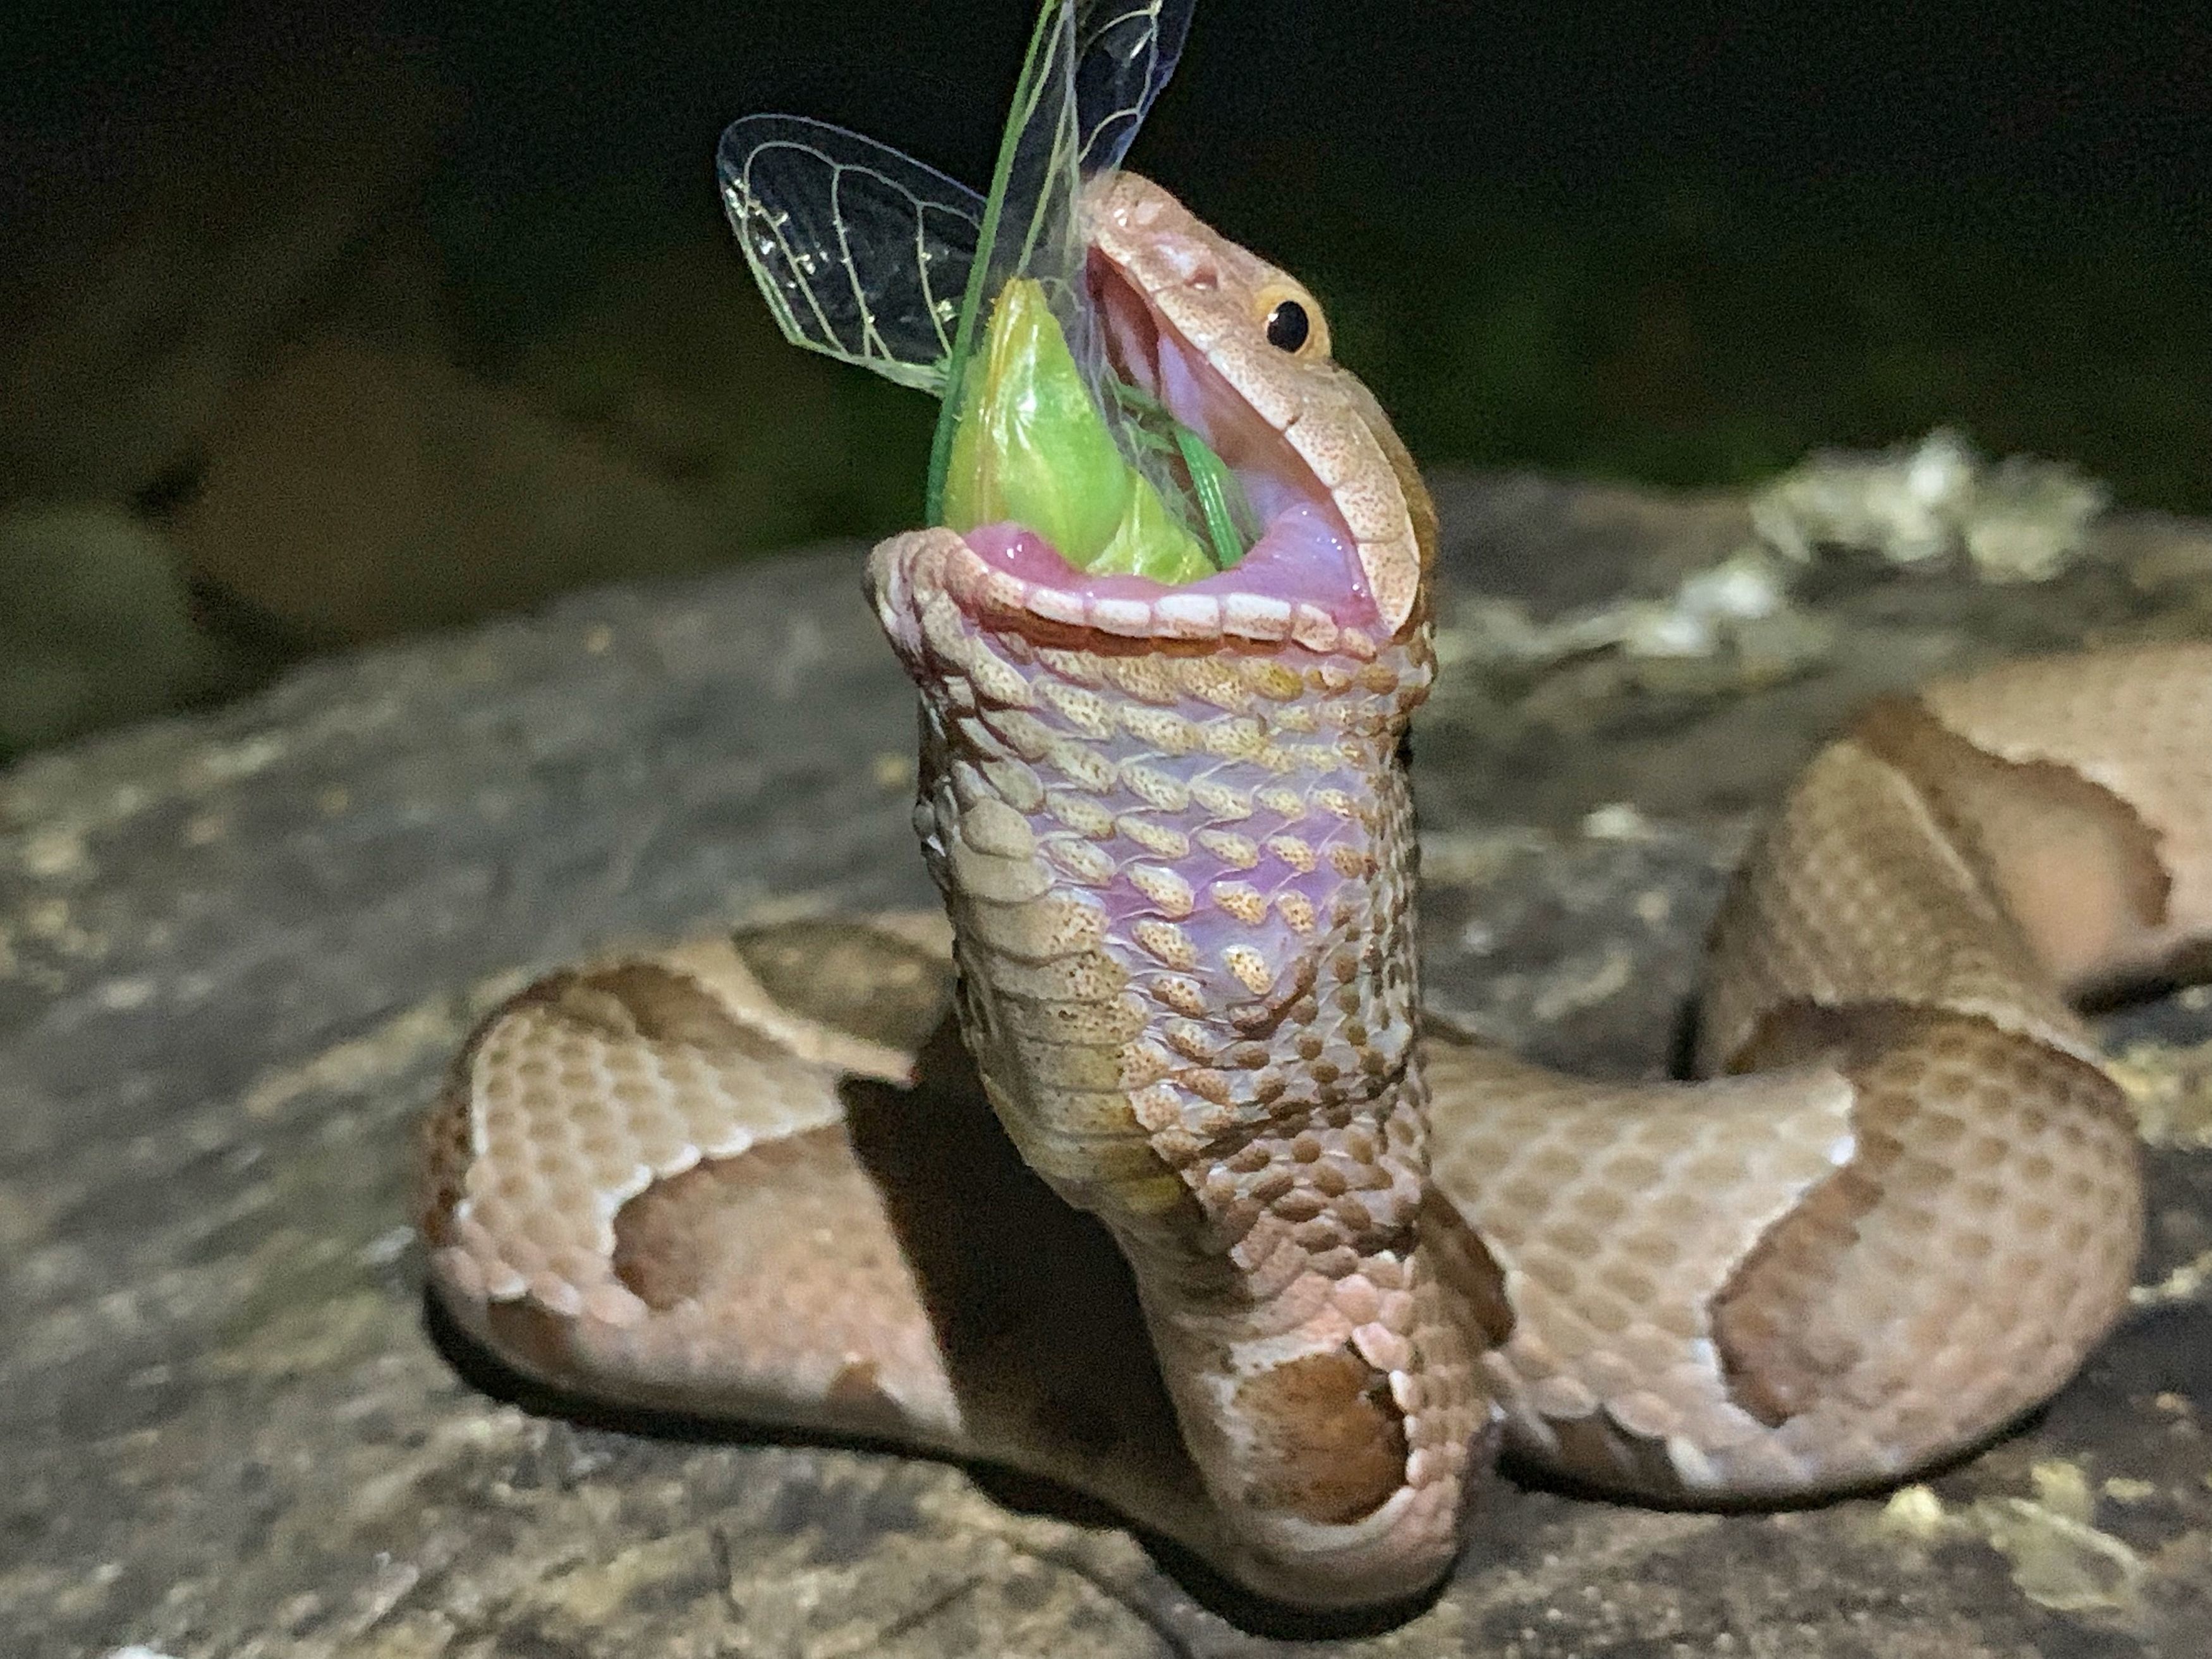 A copperhead snake eating a cicada